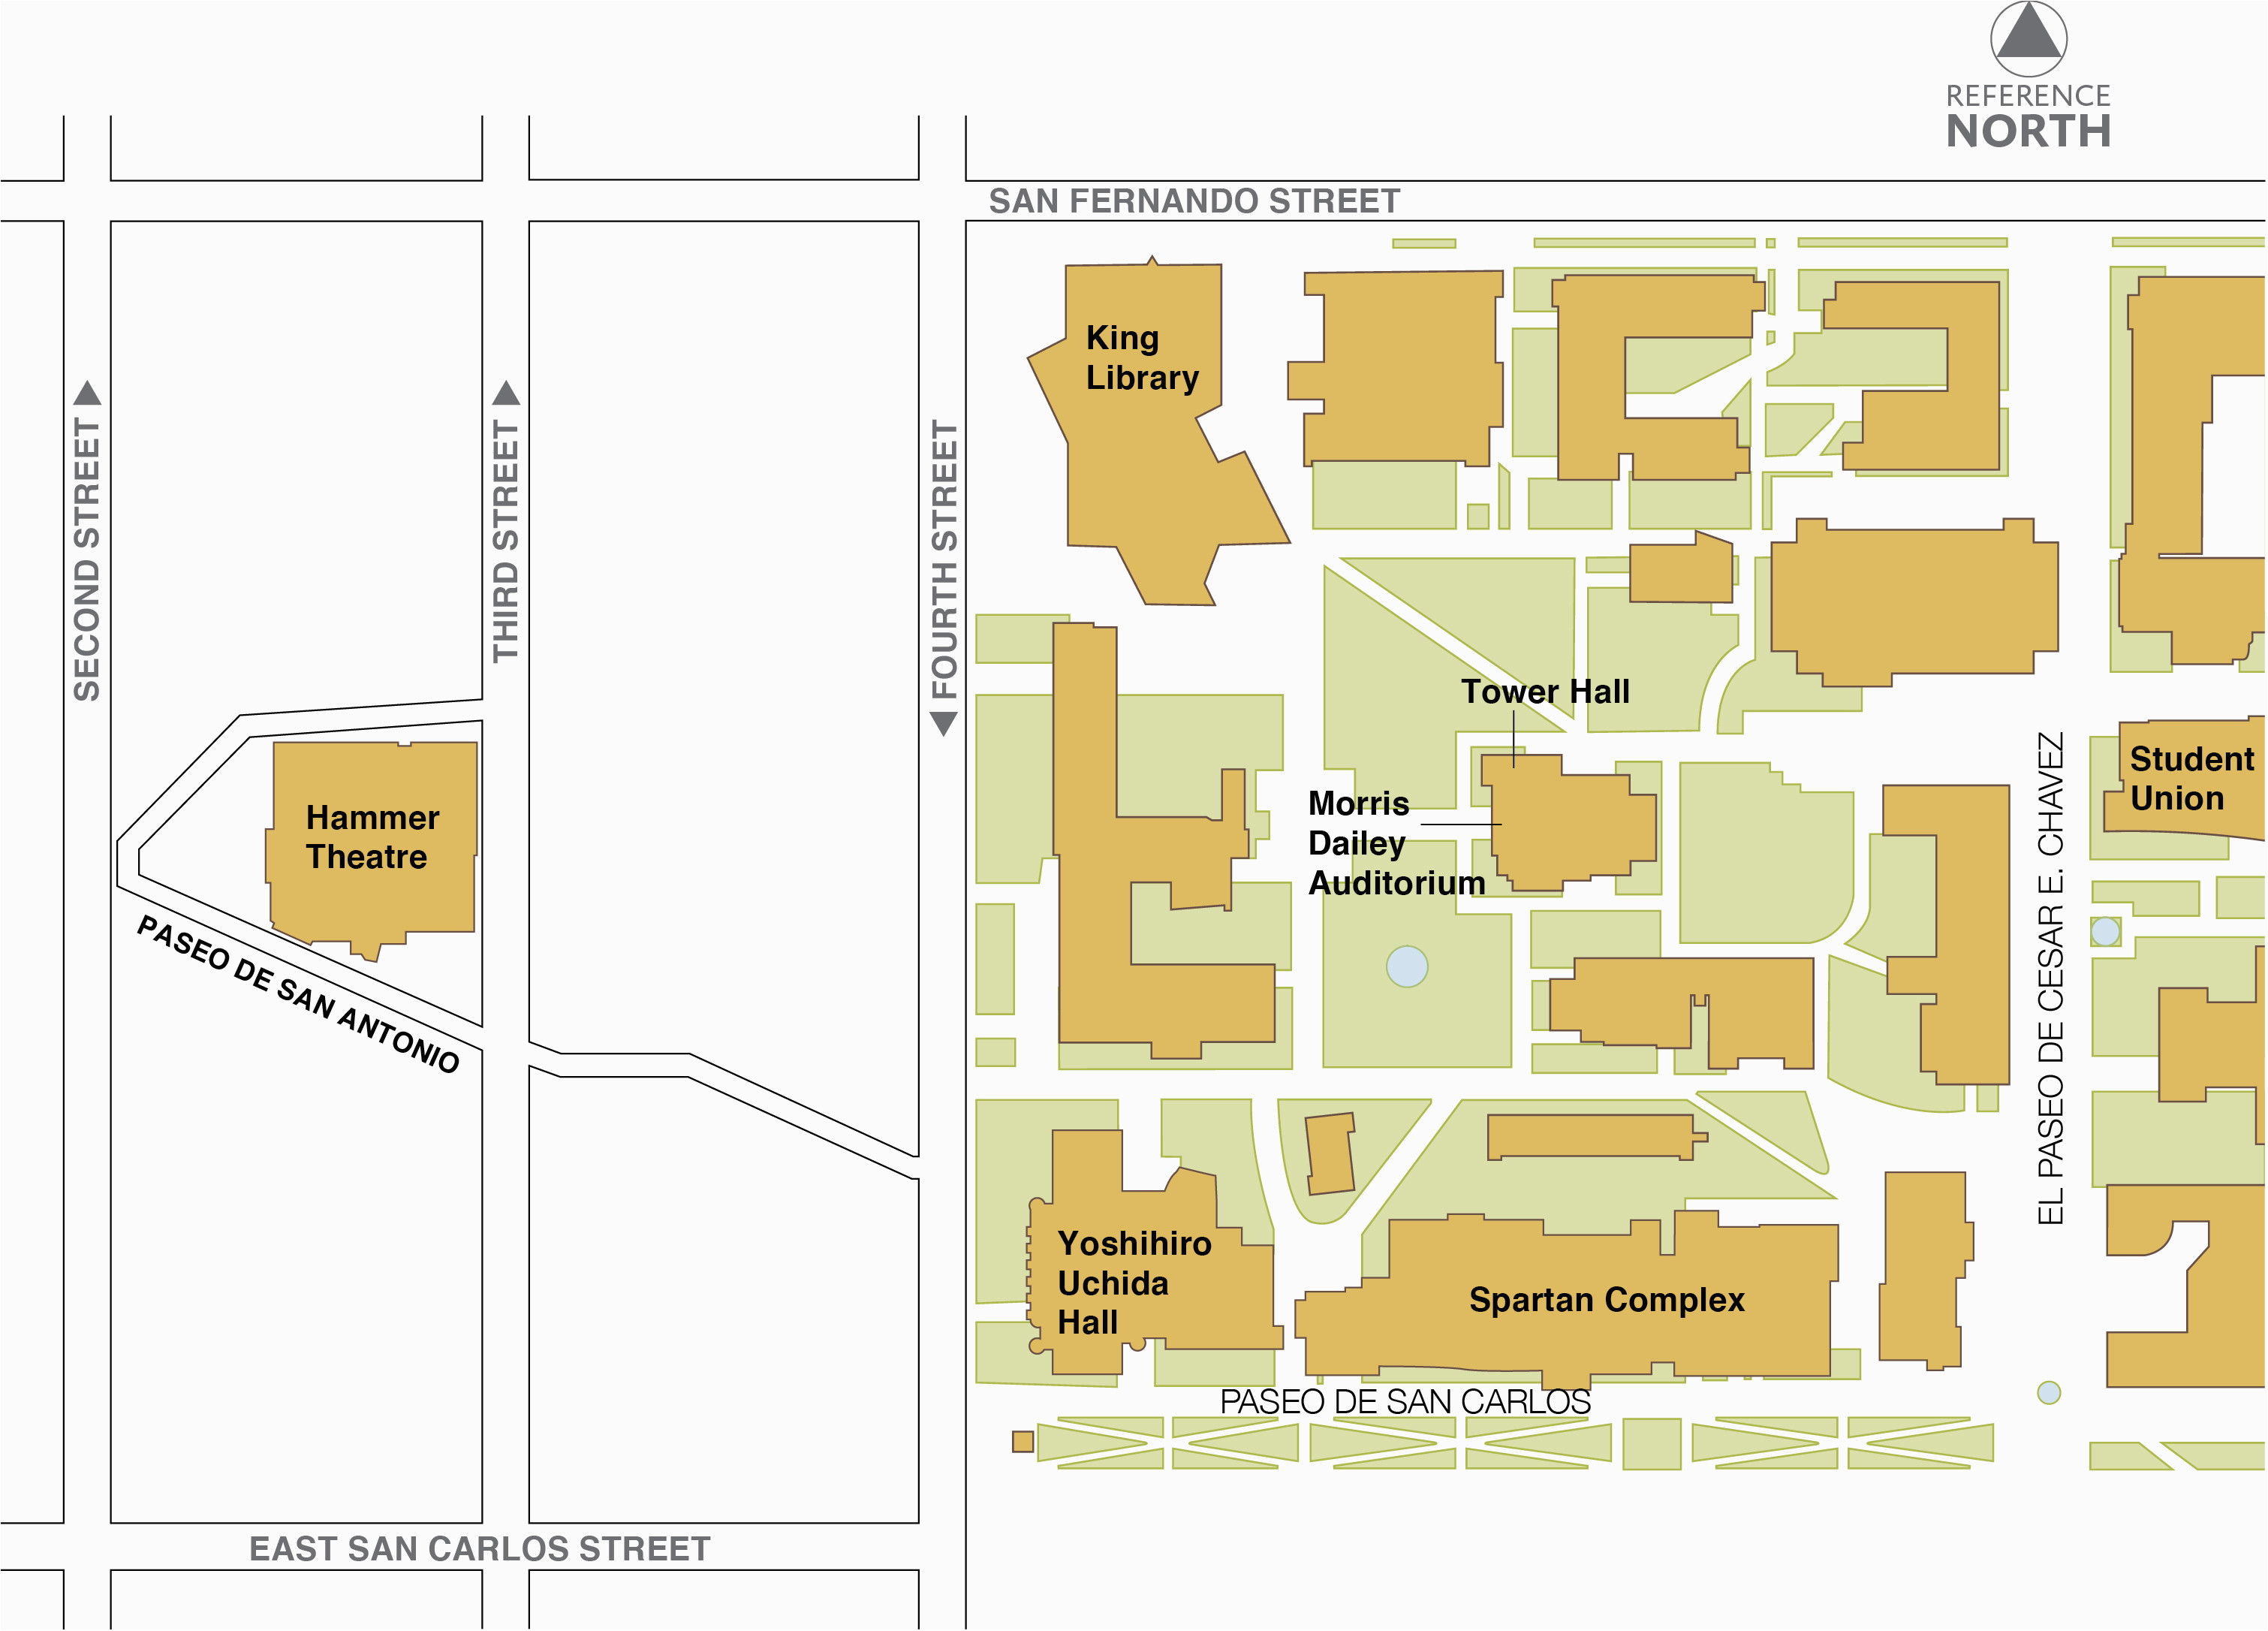 colorado state university map inspirational asu interactive map